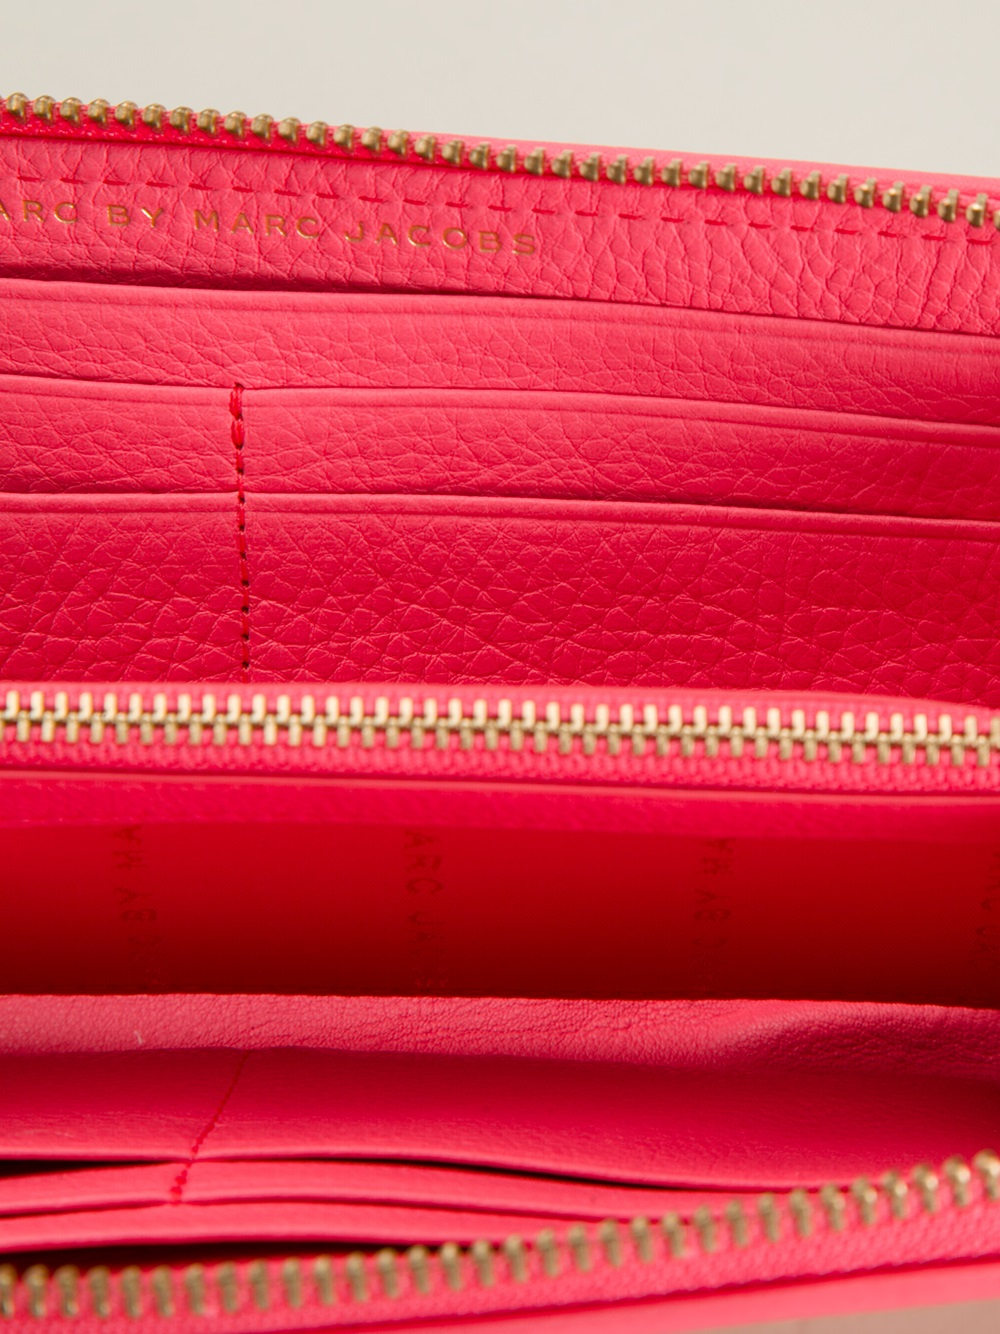 Lyst - Marc by marc jacobs Zip Fastening Wallet in Pink